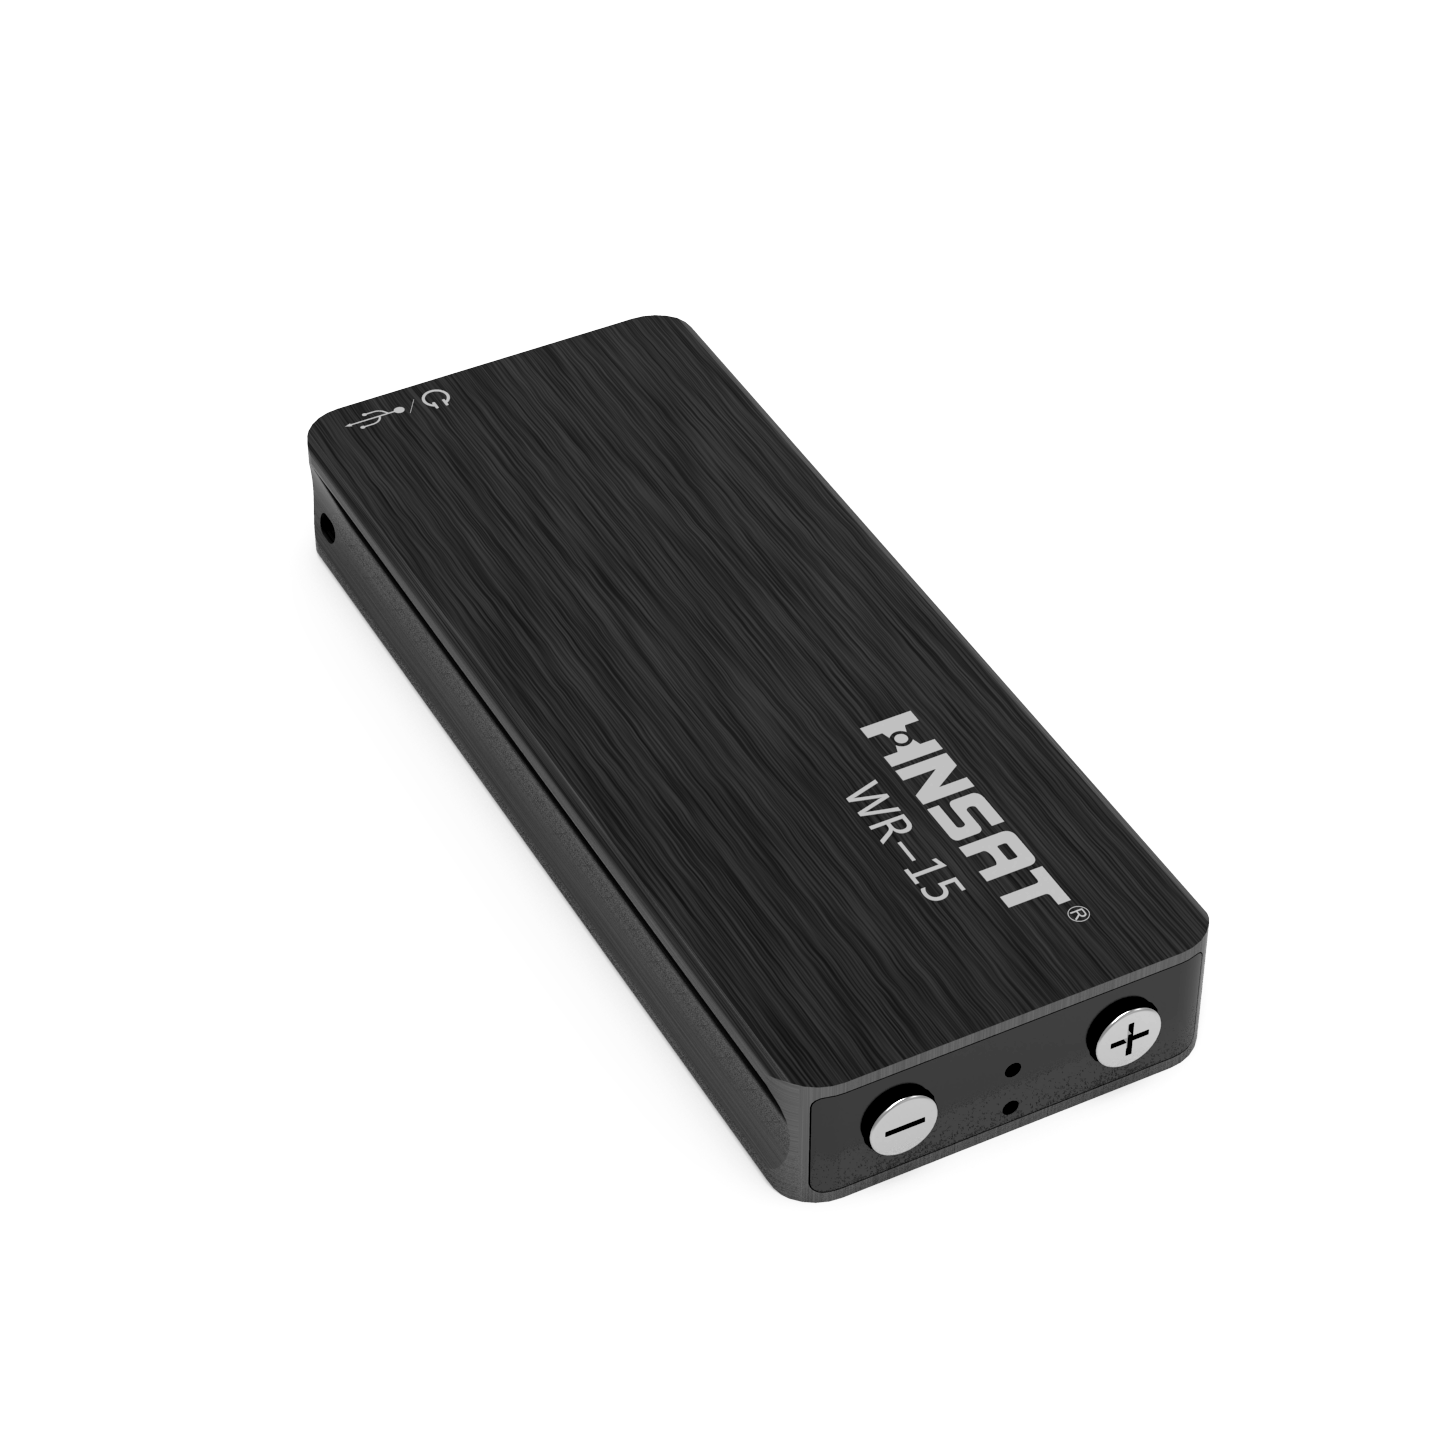 product-Hnsat-Mini Voice Activated Recorder Micro Hidden Voice Recorder USB Memory Stick Sound Recor